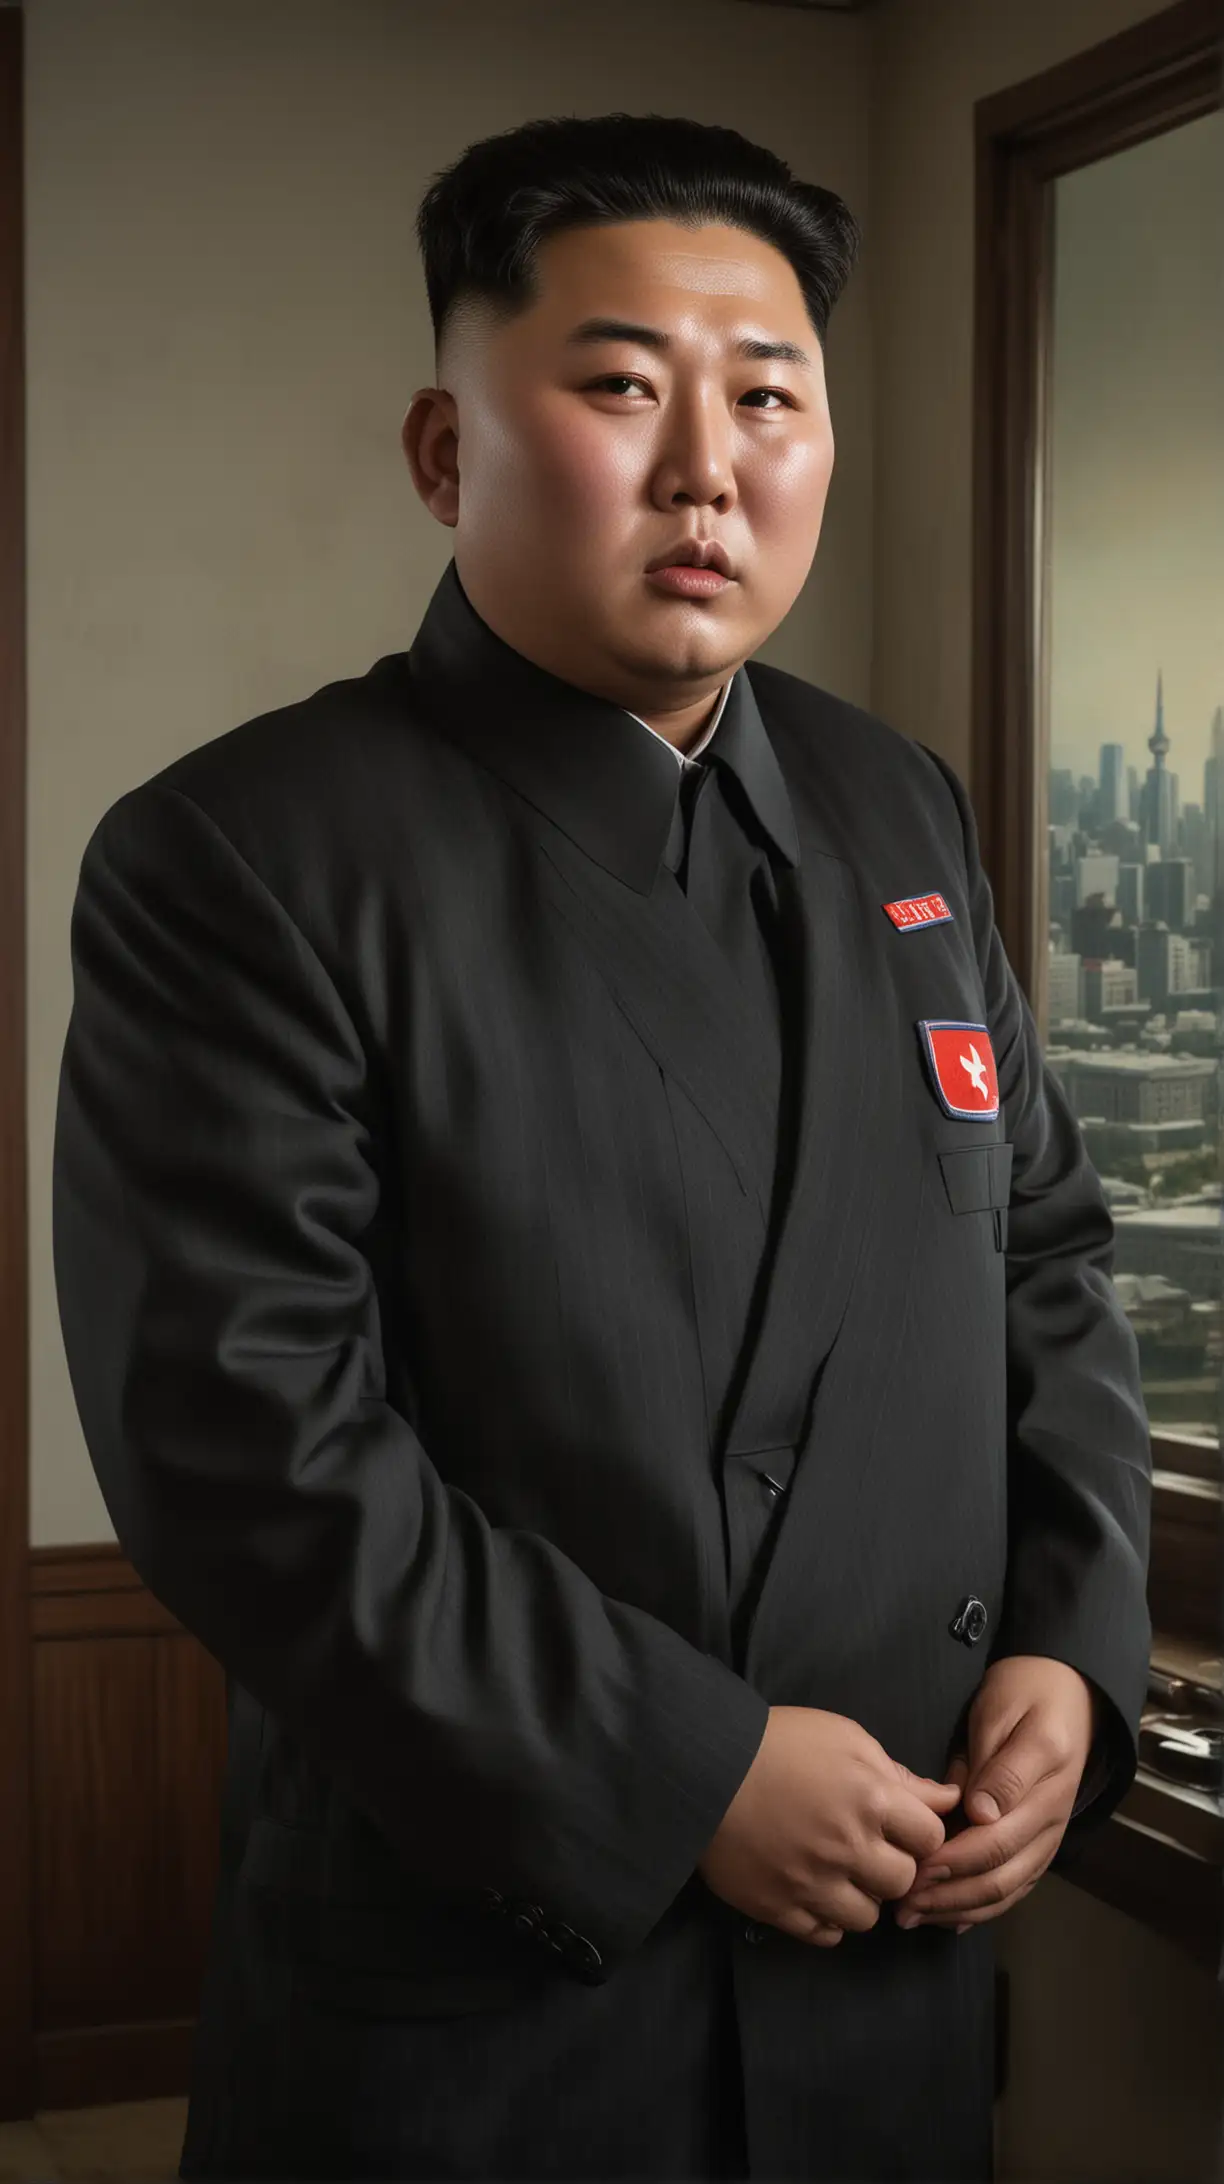 North Korean Leader Kim Jong Un in Formal Attire